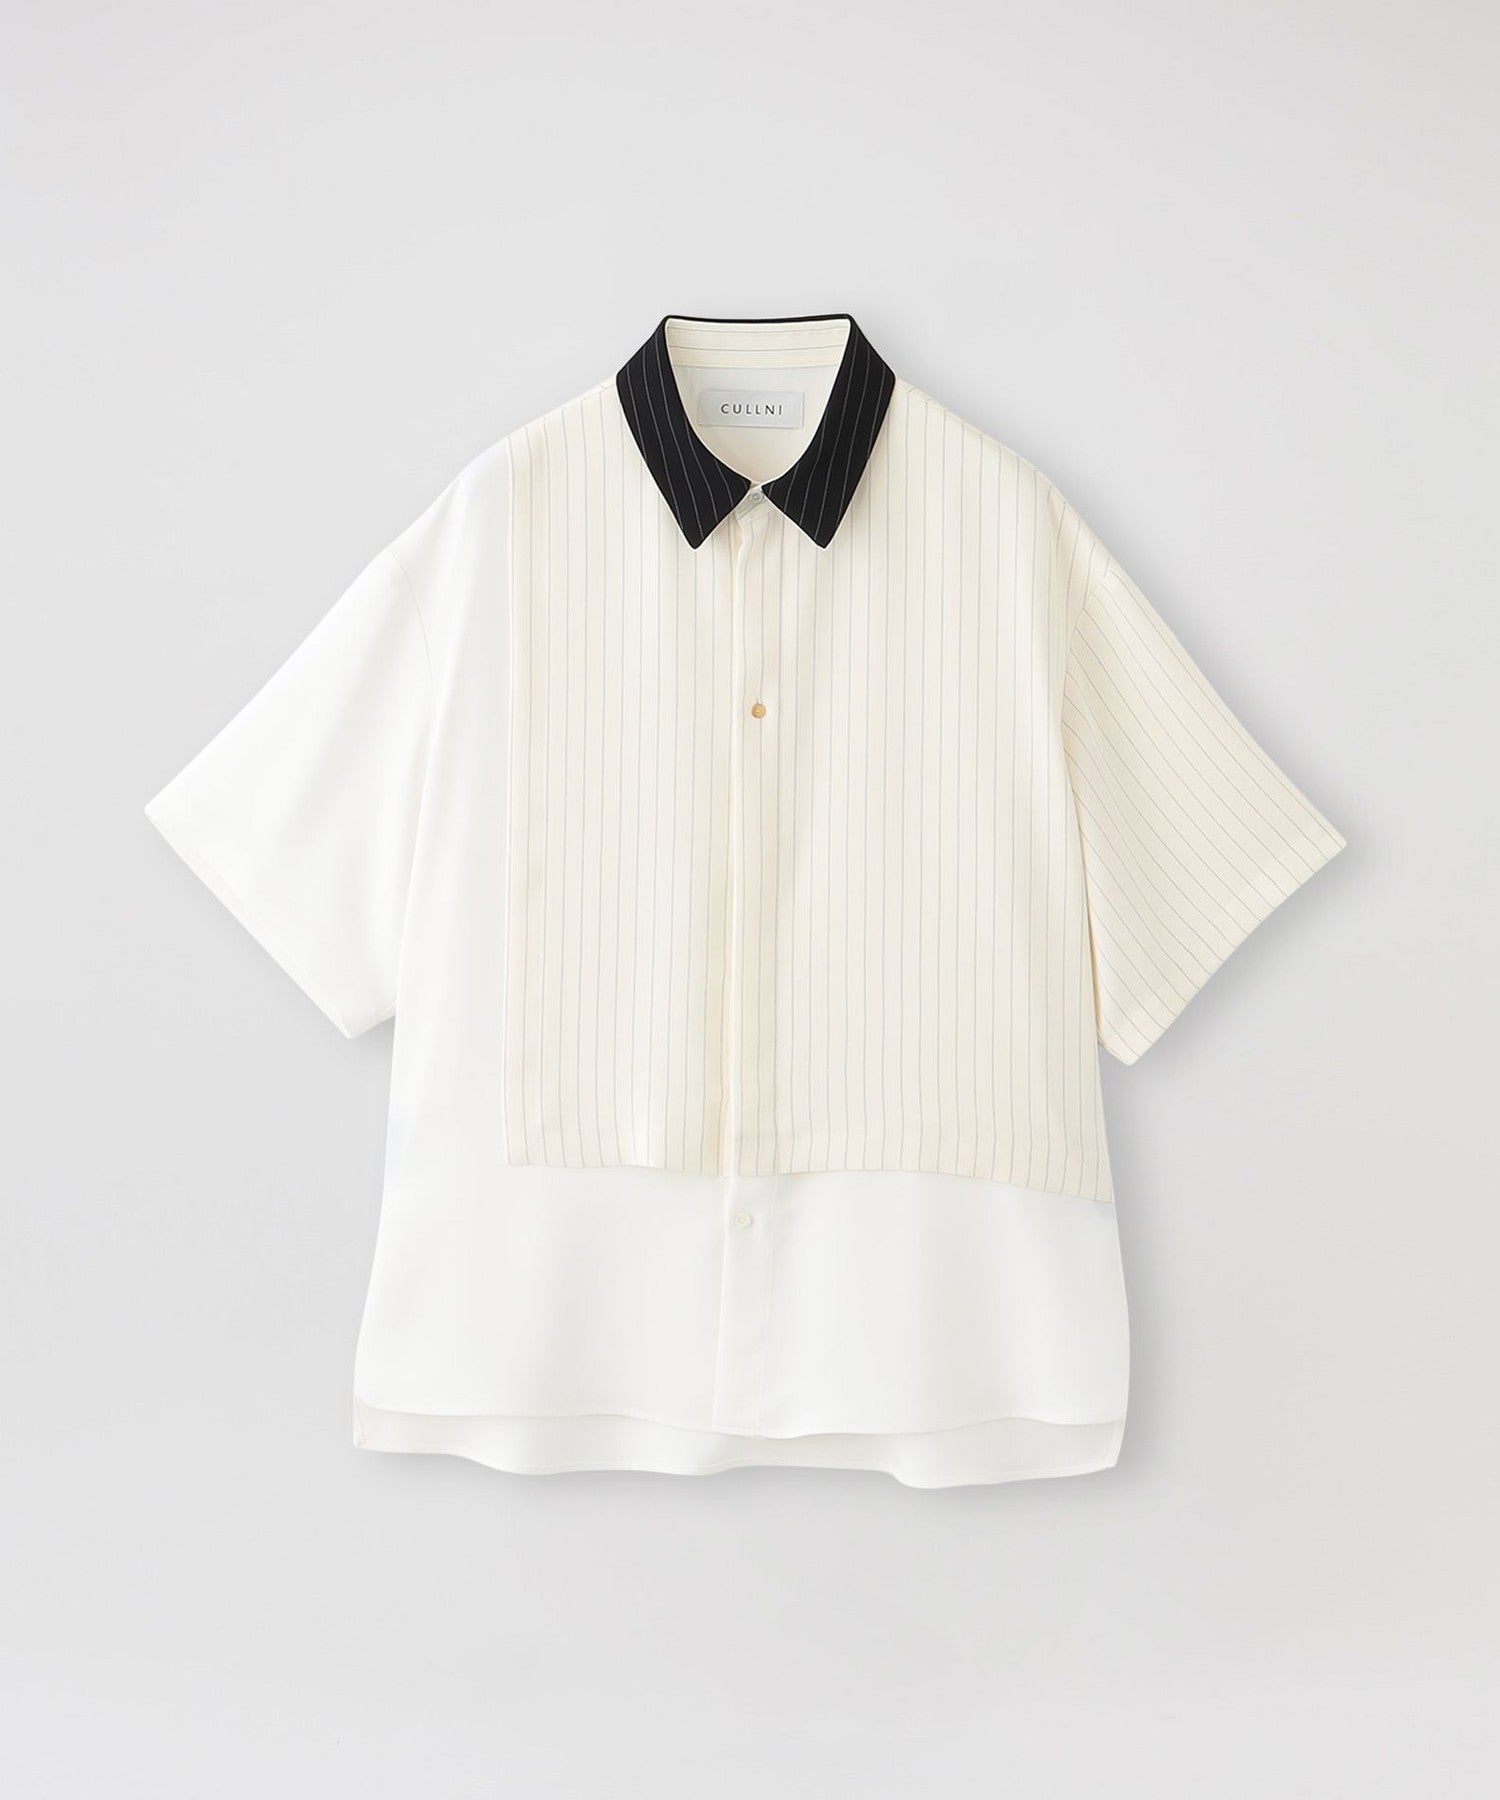 【CULLNI/クルニ】シャツ Double Cloth Asymmetrical Stripe Short Sleeve Shirt 24